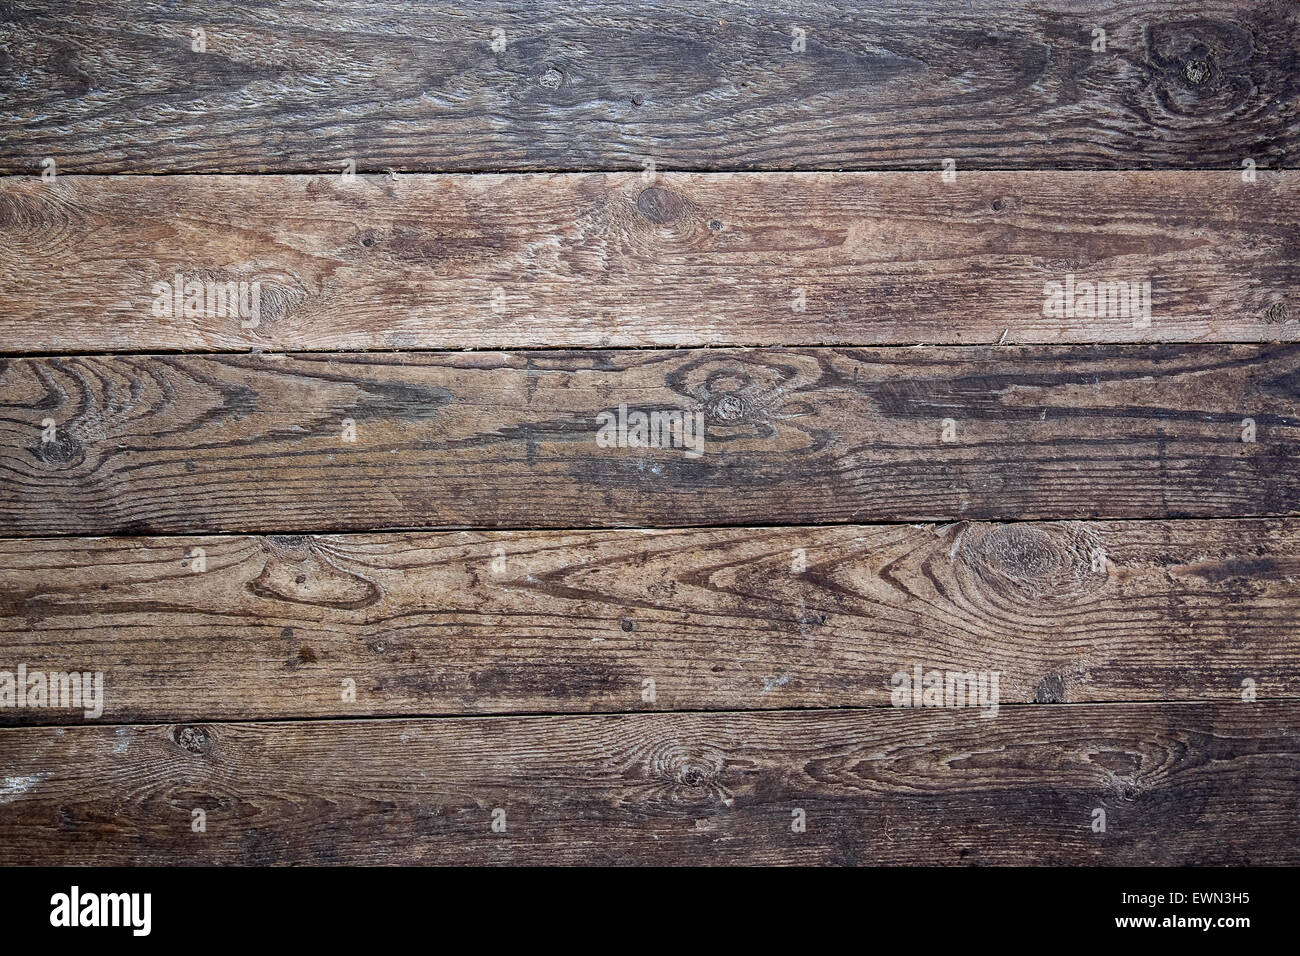 Wooden planks Stock Photo